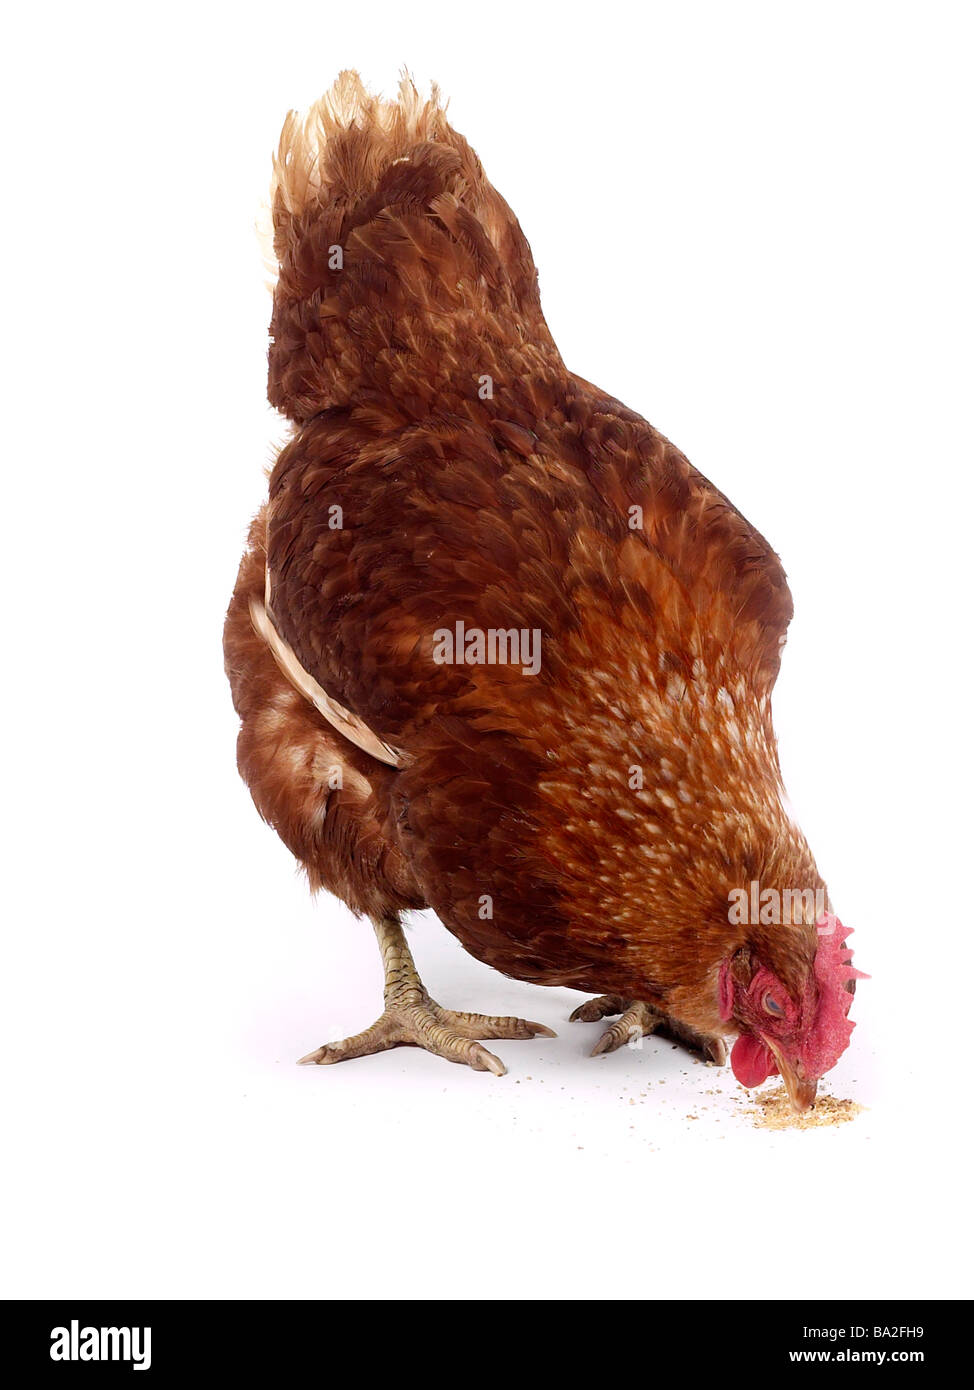 Un pollo comiendo chickenfeed. Foto de stock